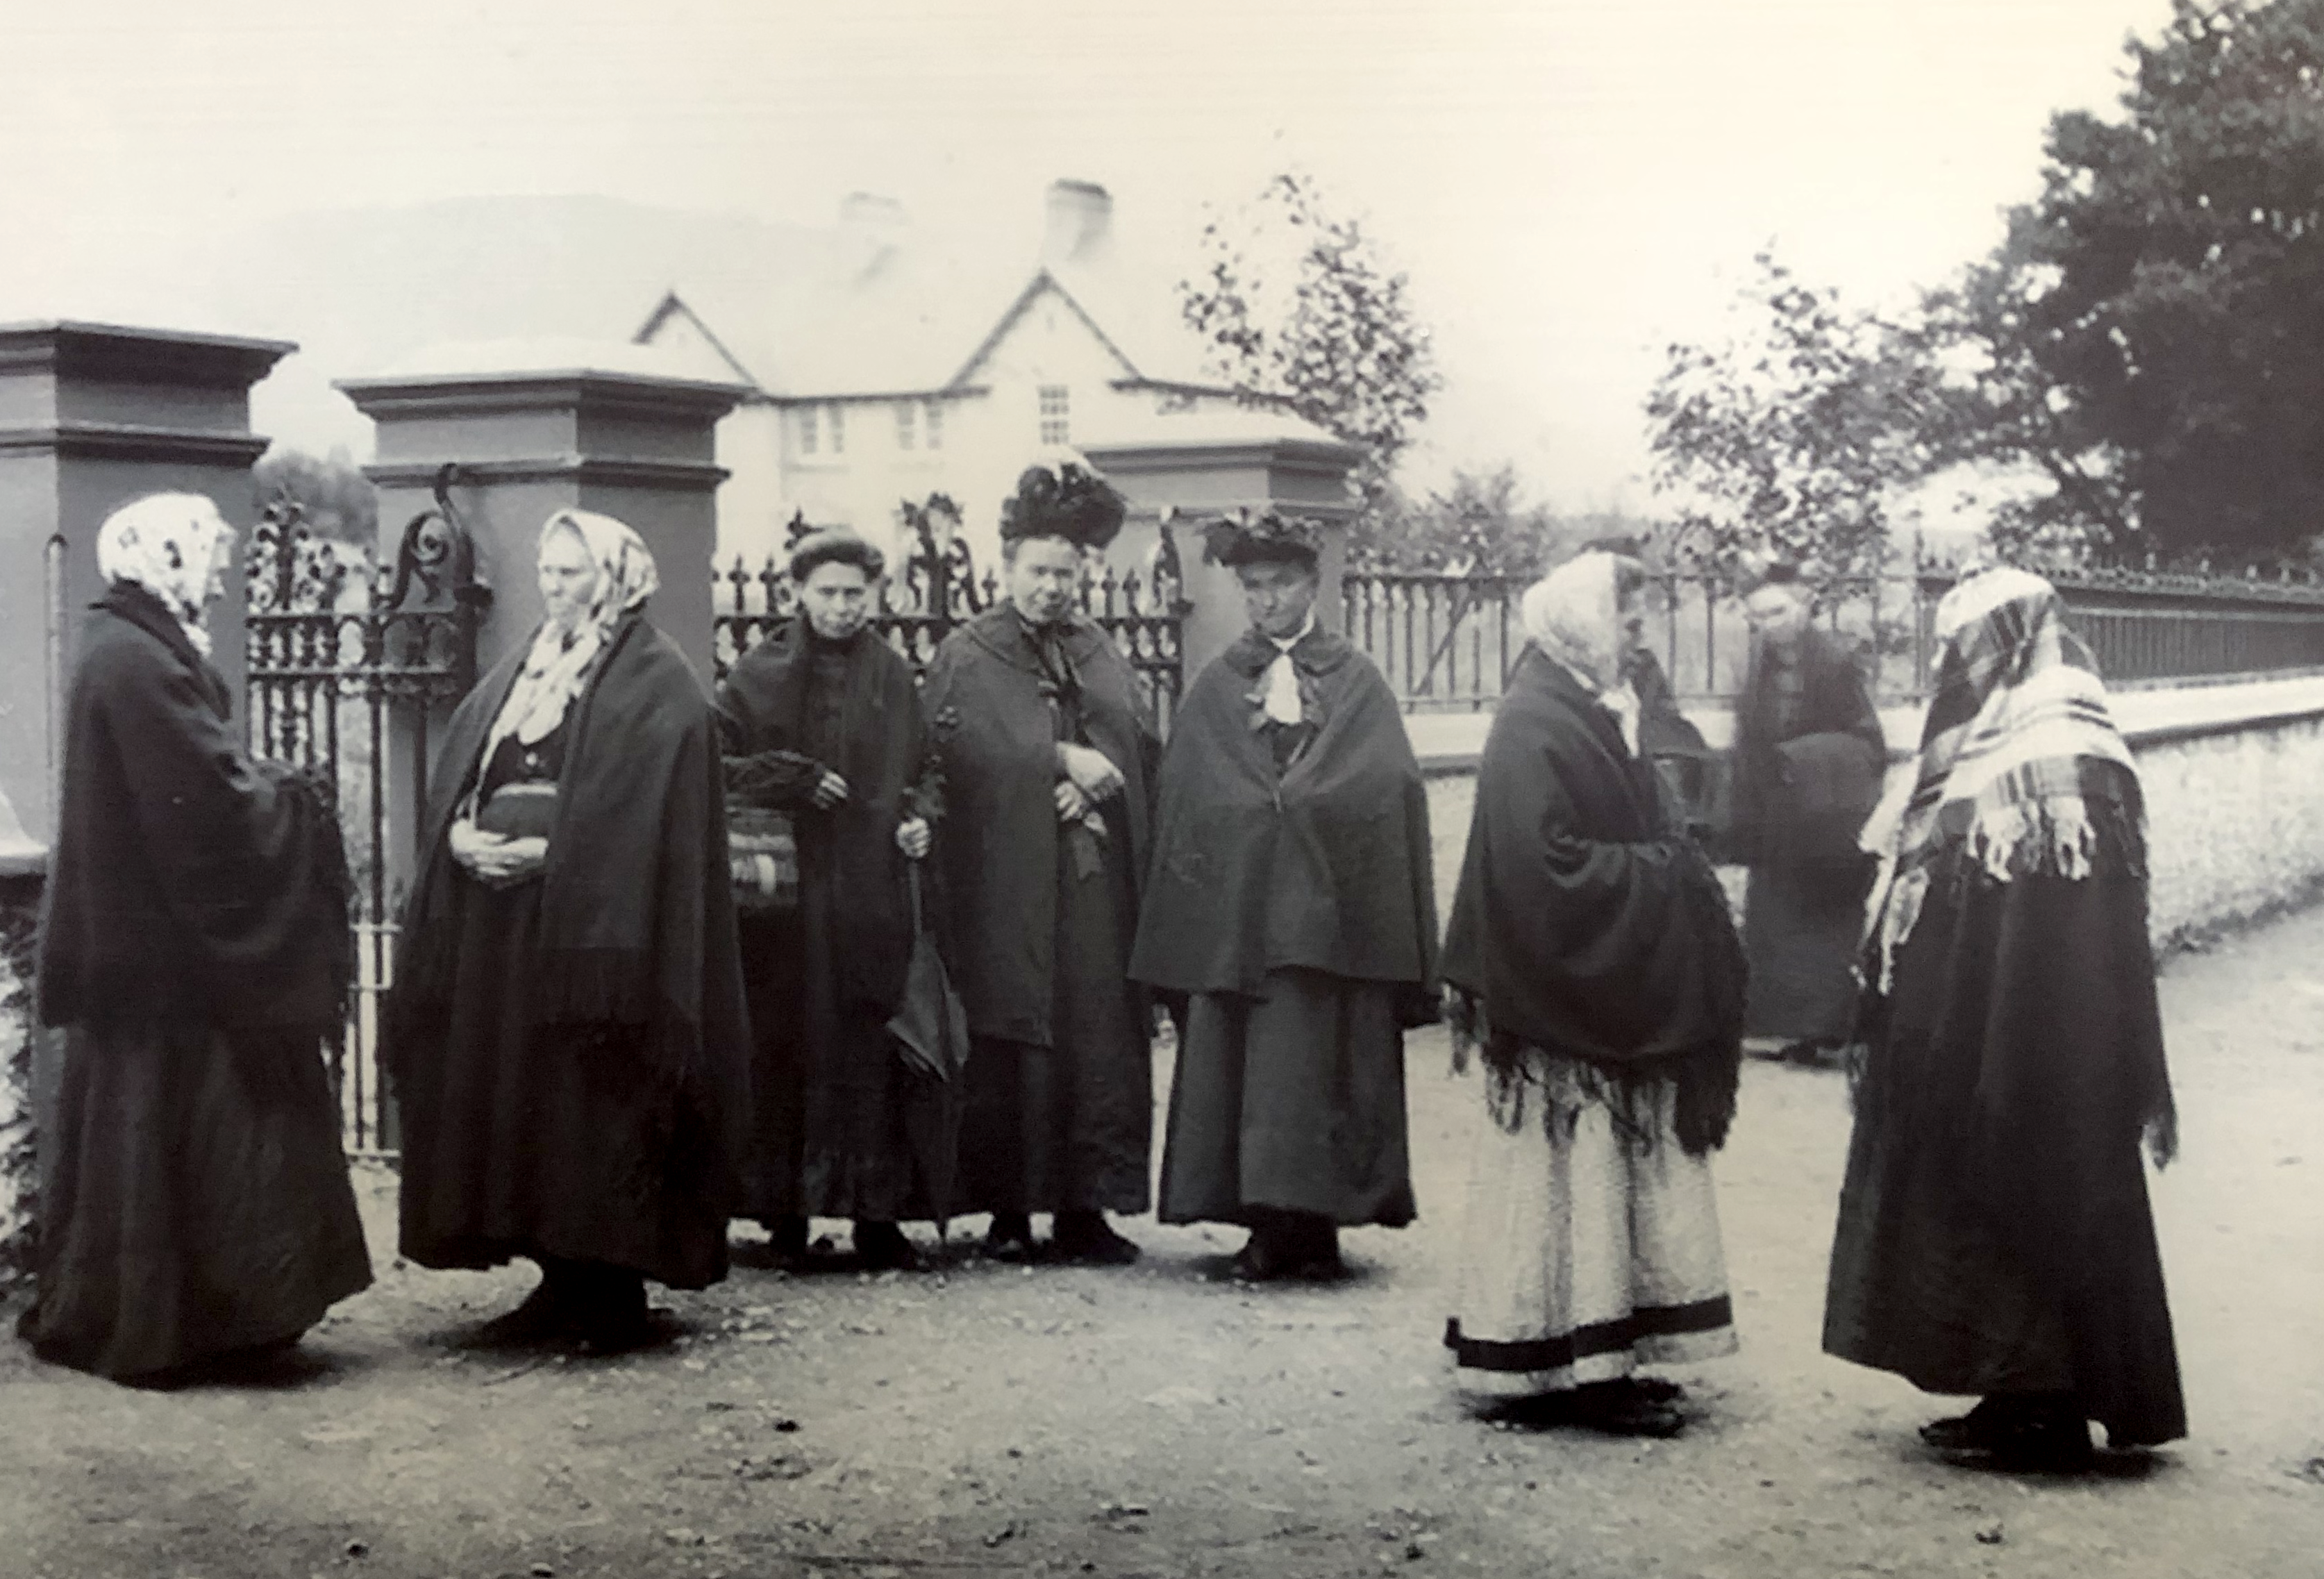 Irish women gathered wearing Tweed and wool capes